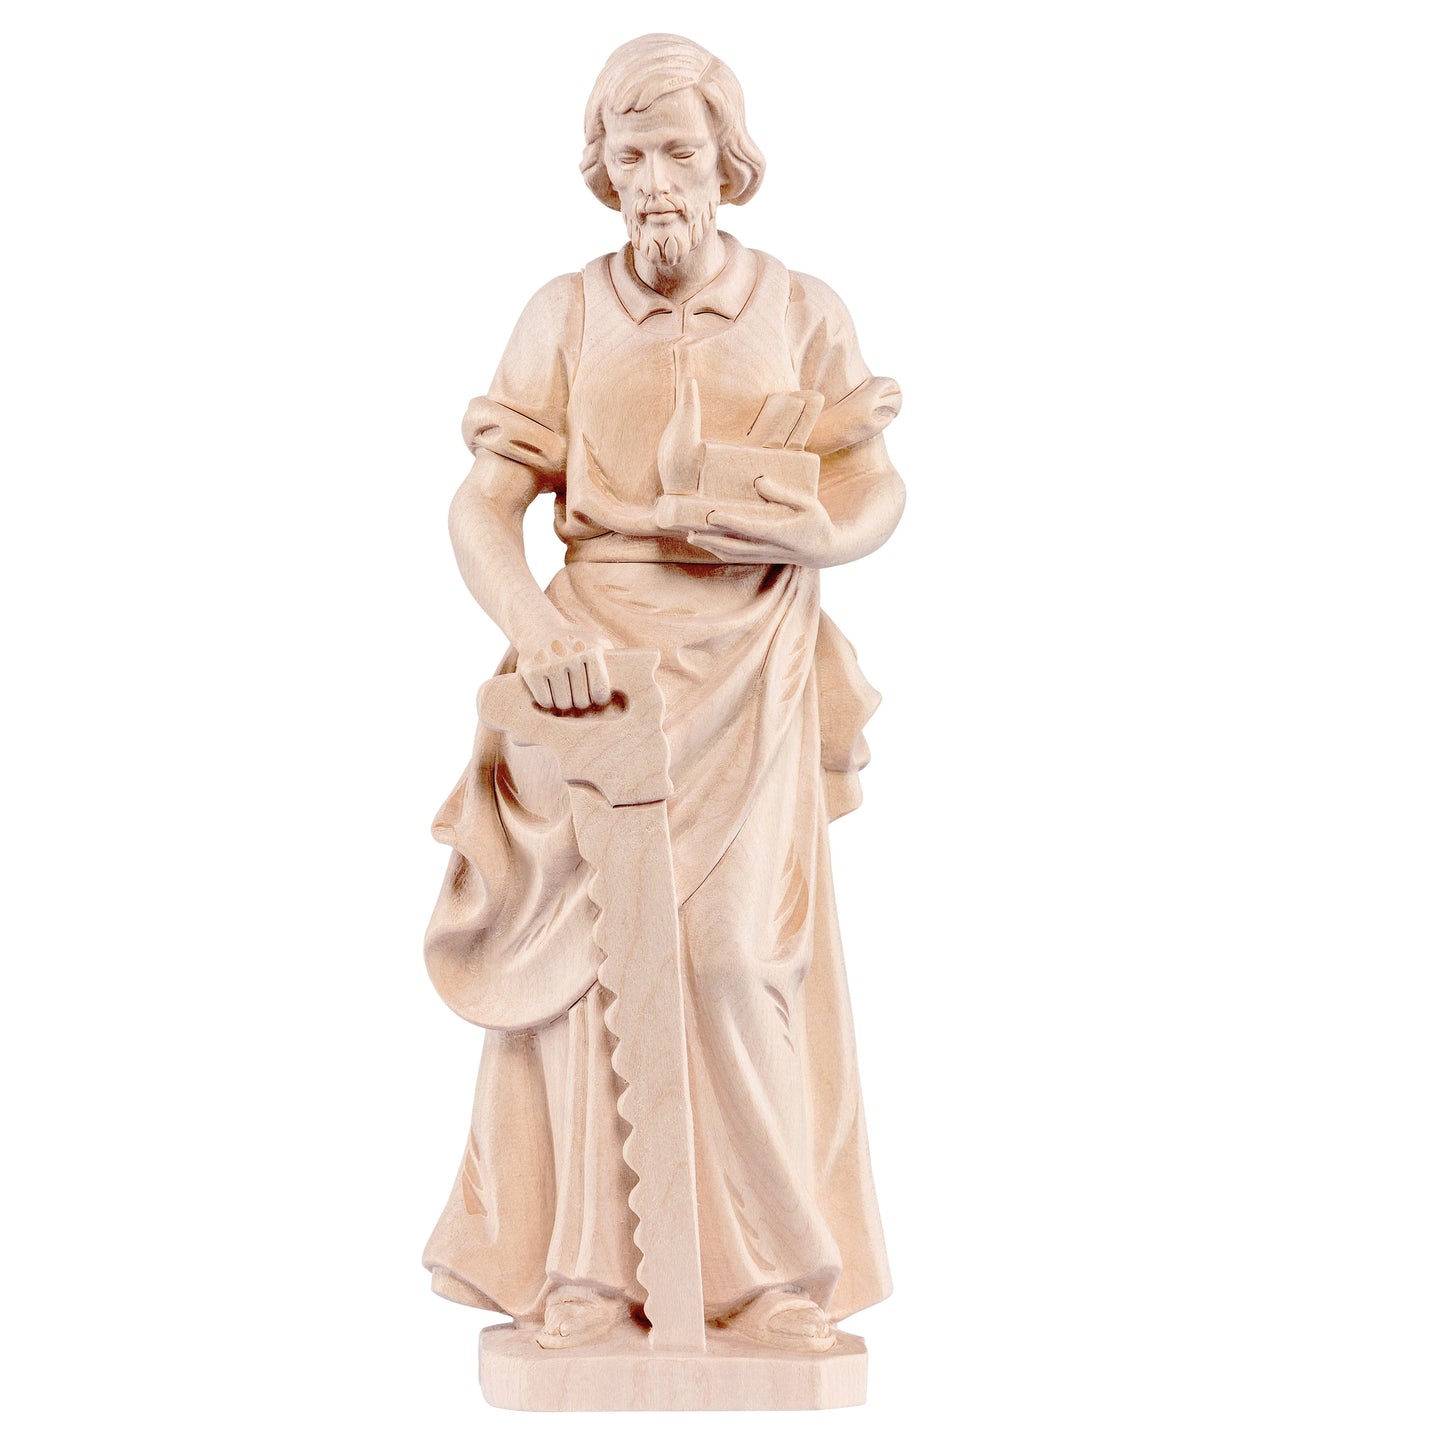 MONDO CATTOLICO Natural / 13 cm (5.1 in) Wooden Statue of St. Joseph as Carpenter